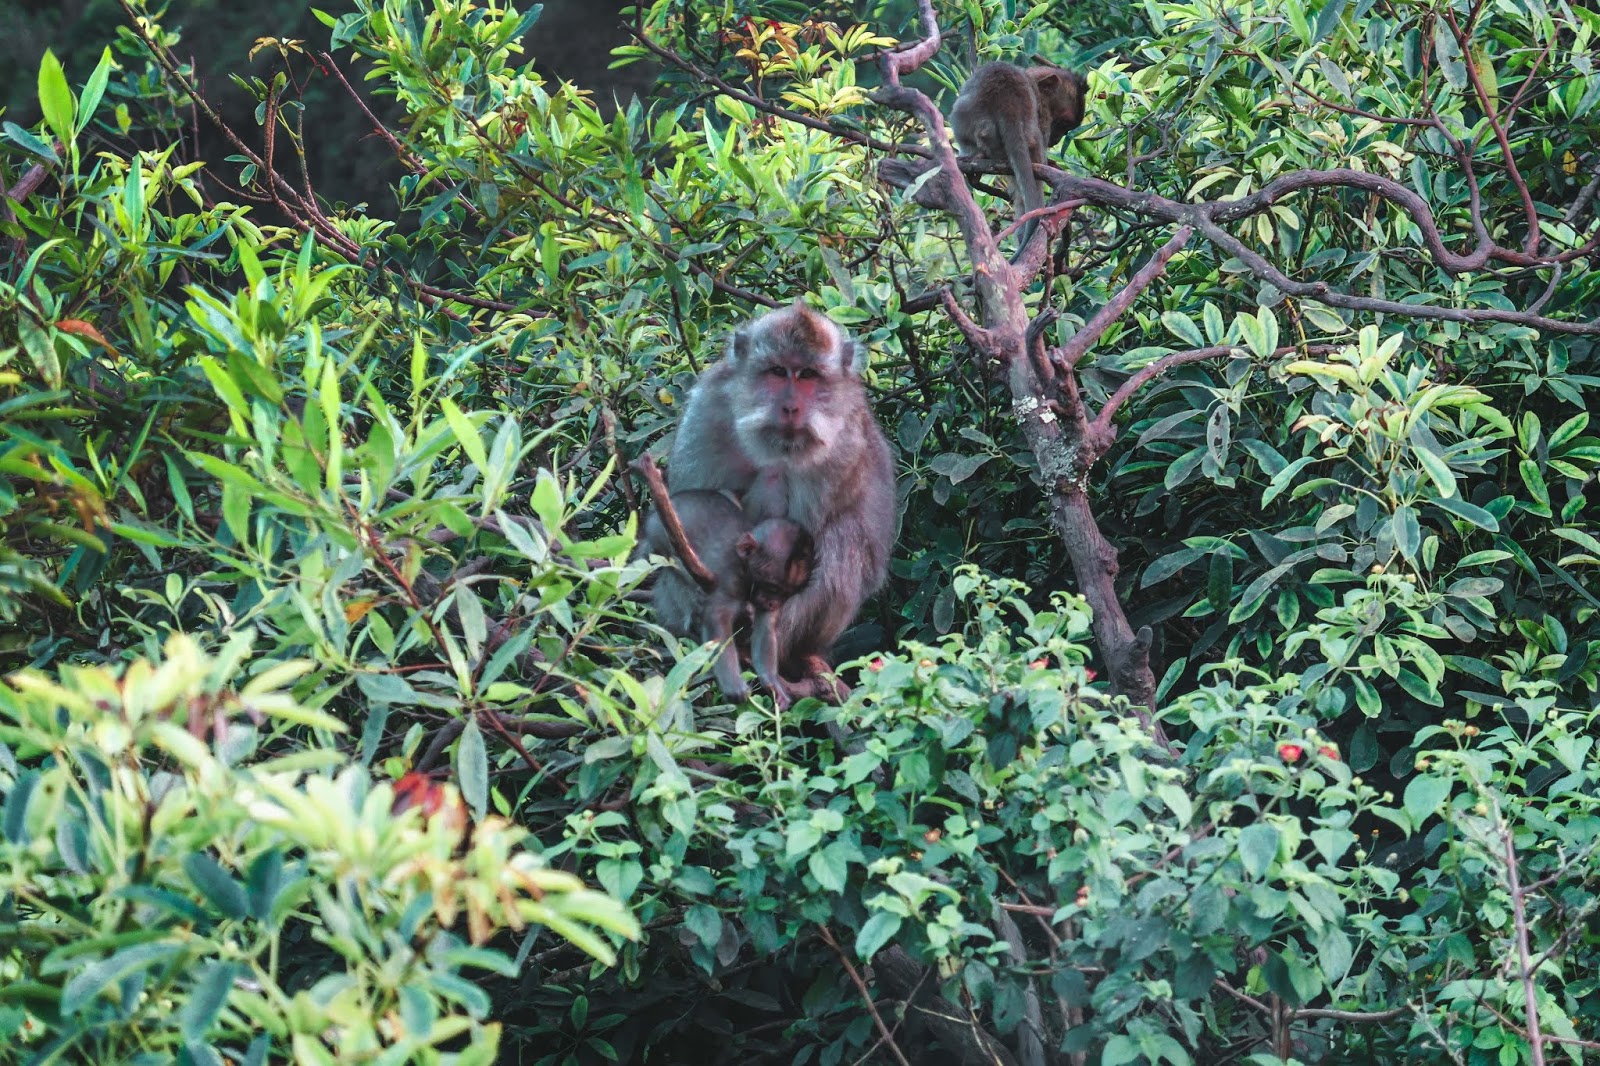 Wild Monkeys in Bali Indonesia